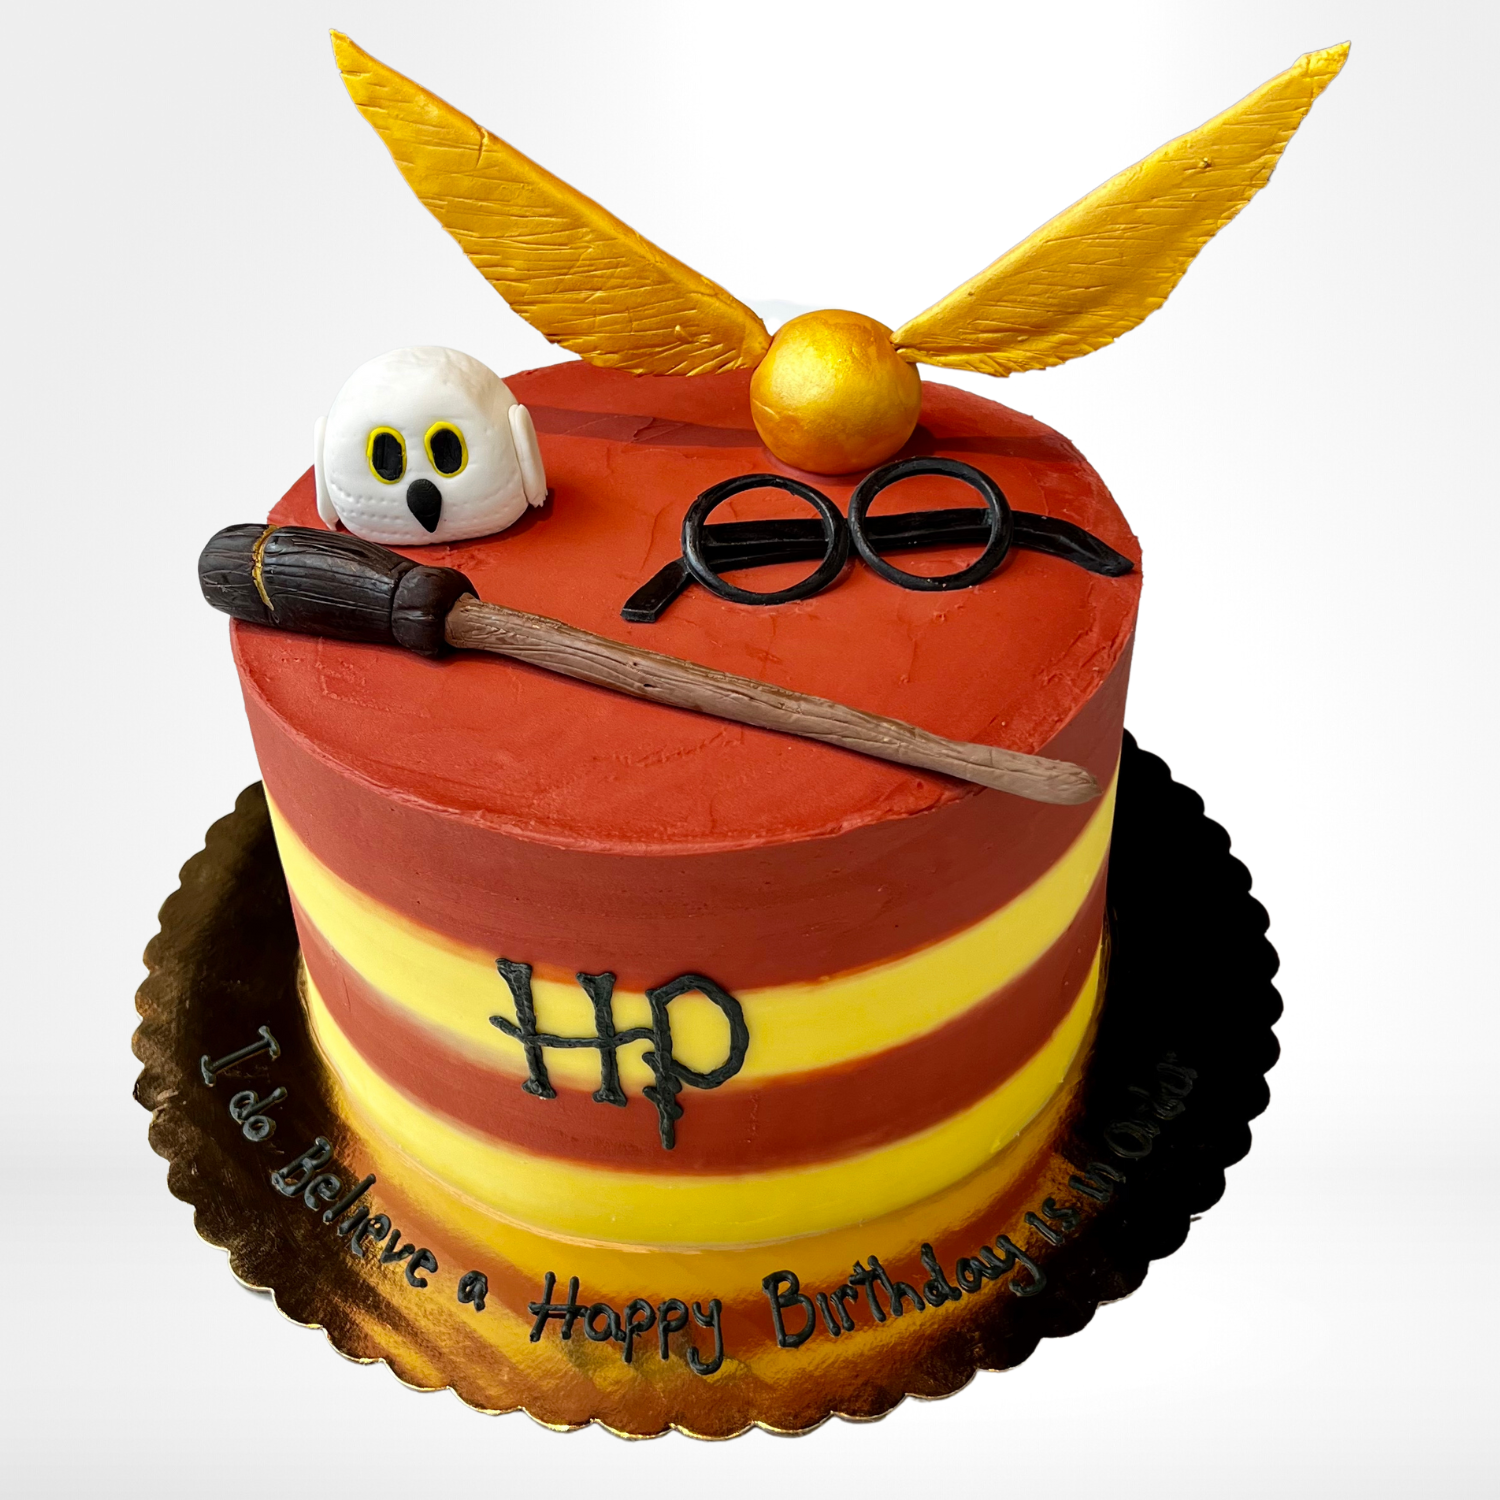 The Best Chocolate Harry Potter Birthday Cake